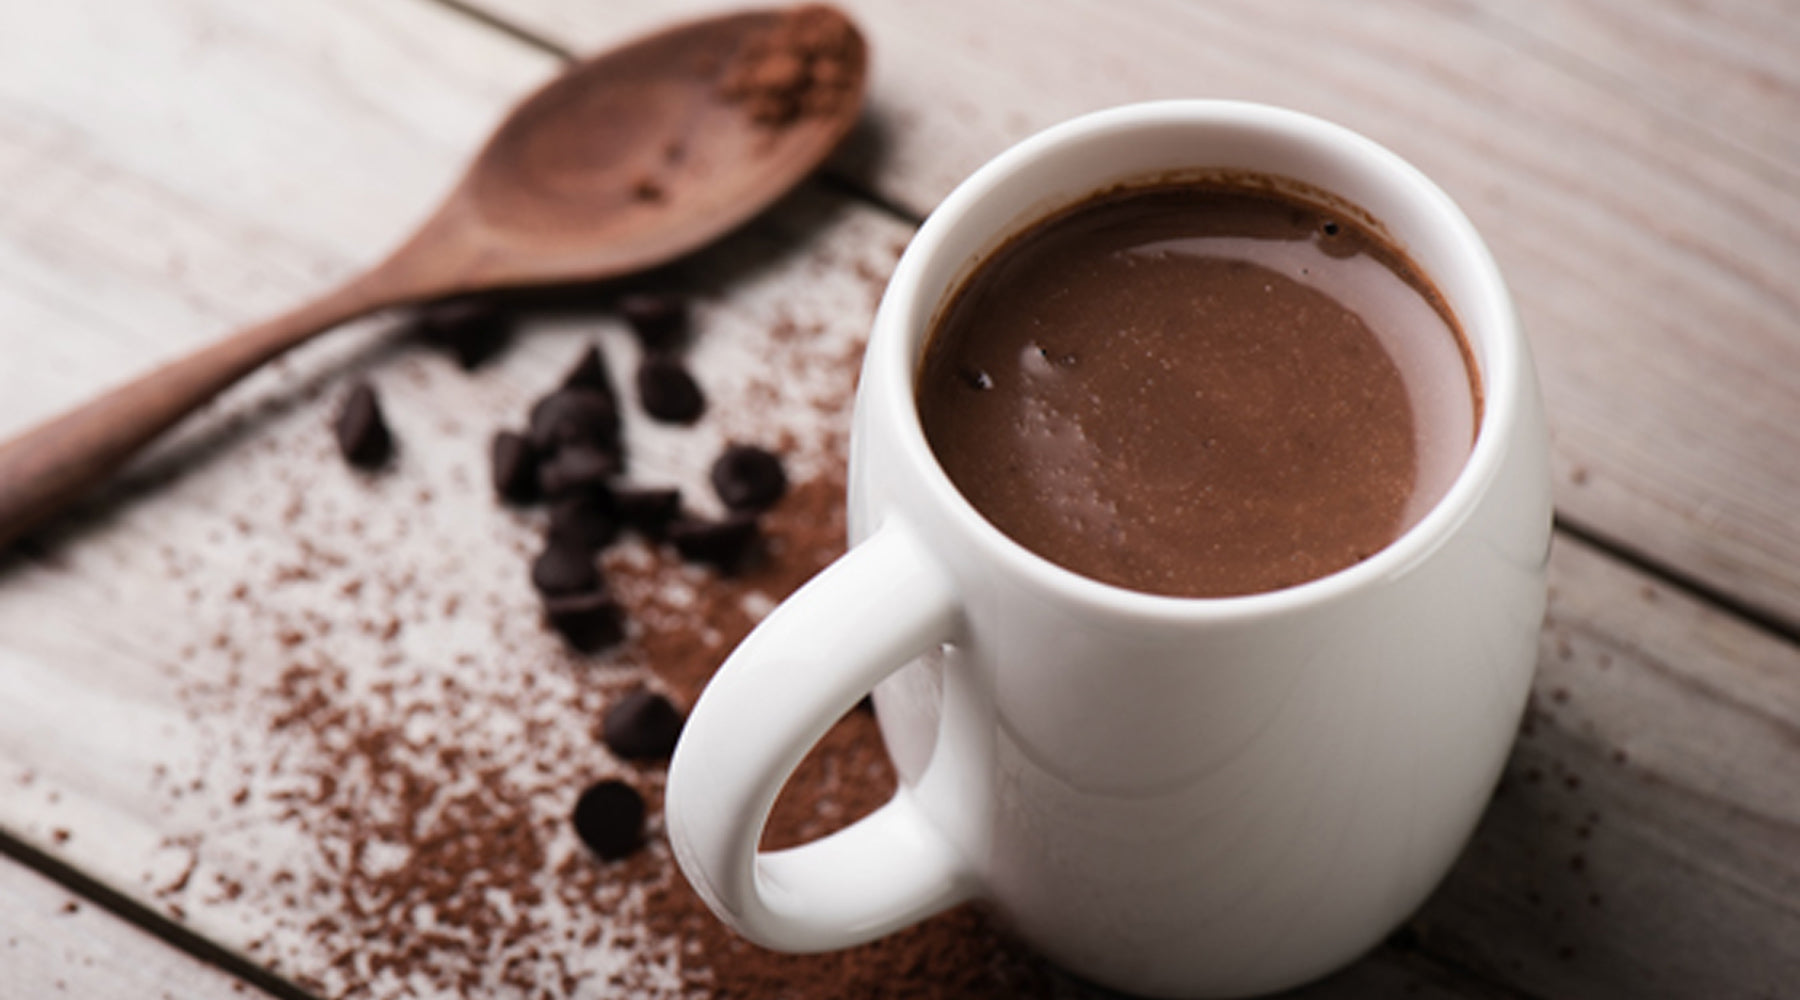 Hot Chocolate Smoothie